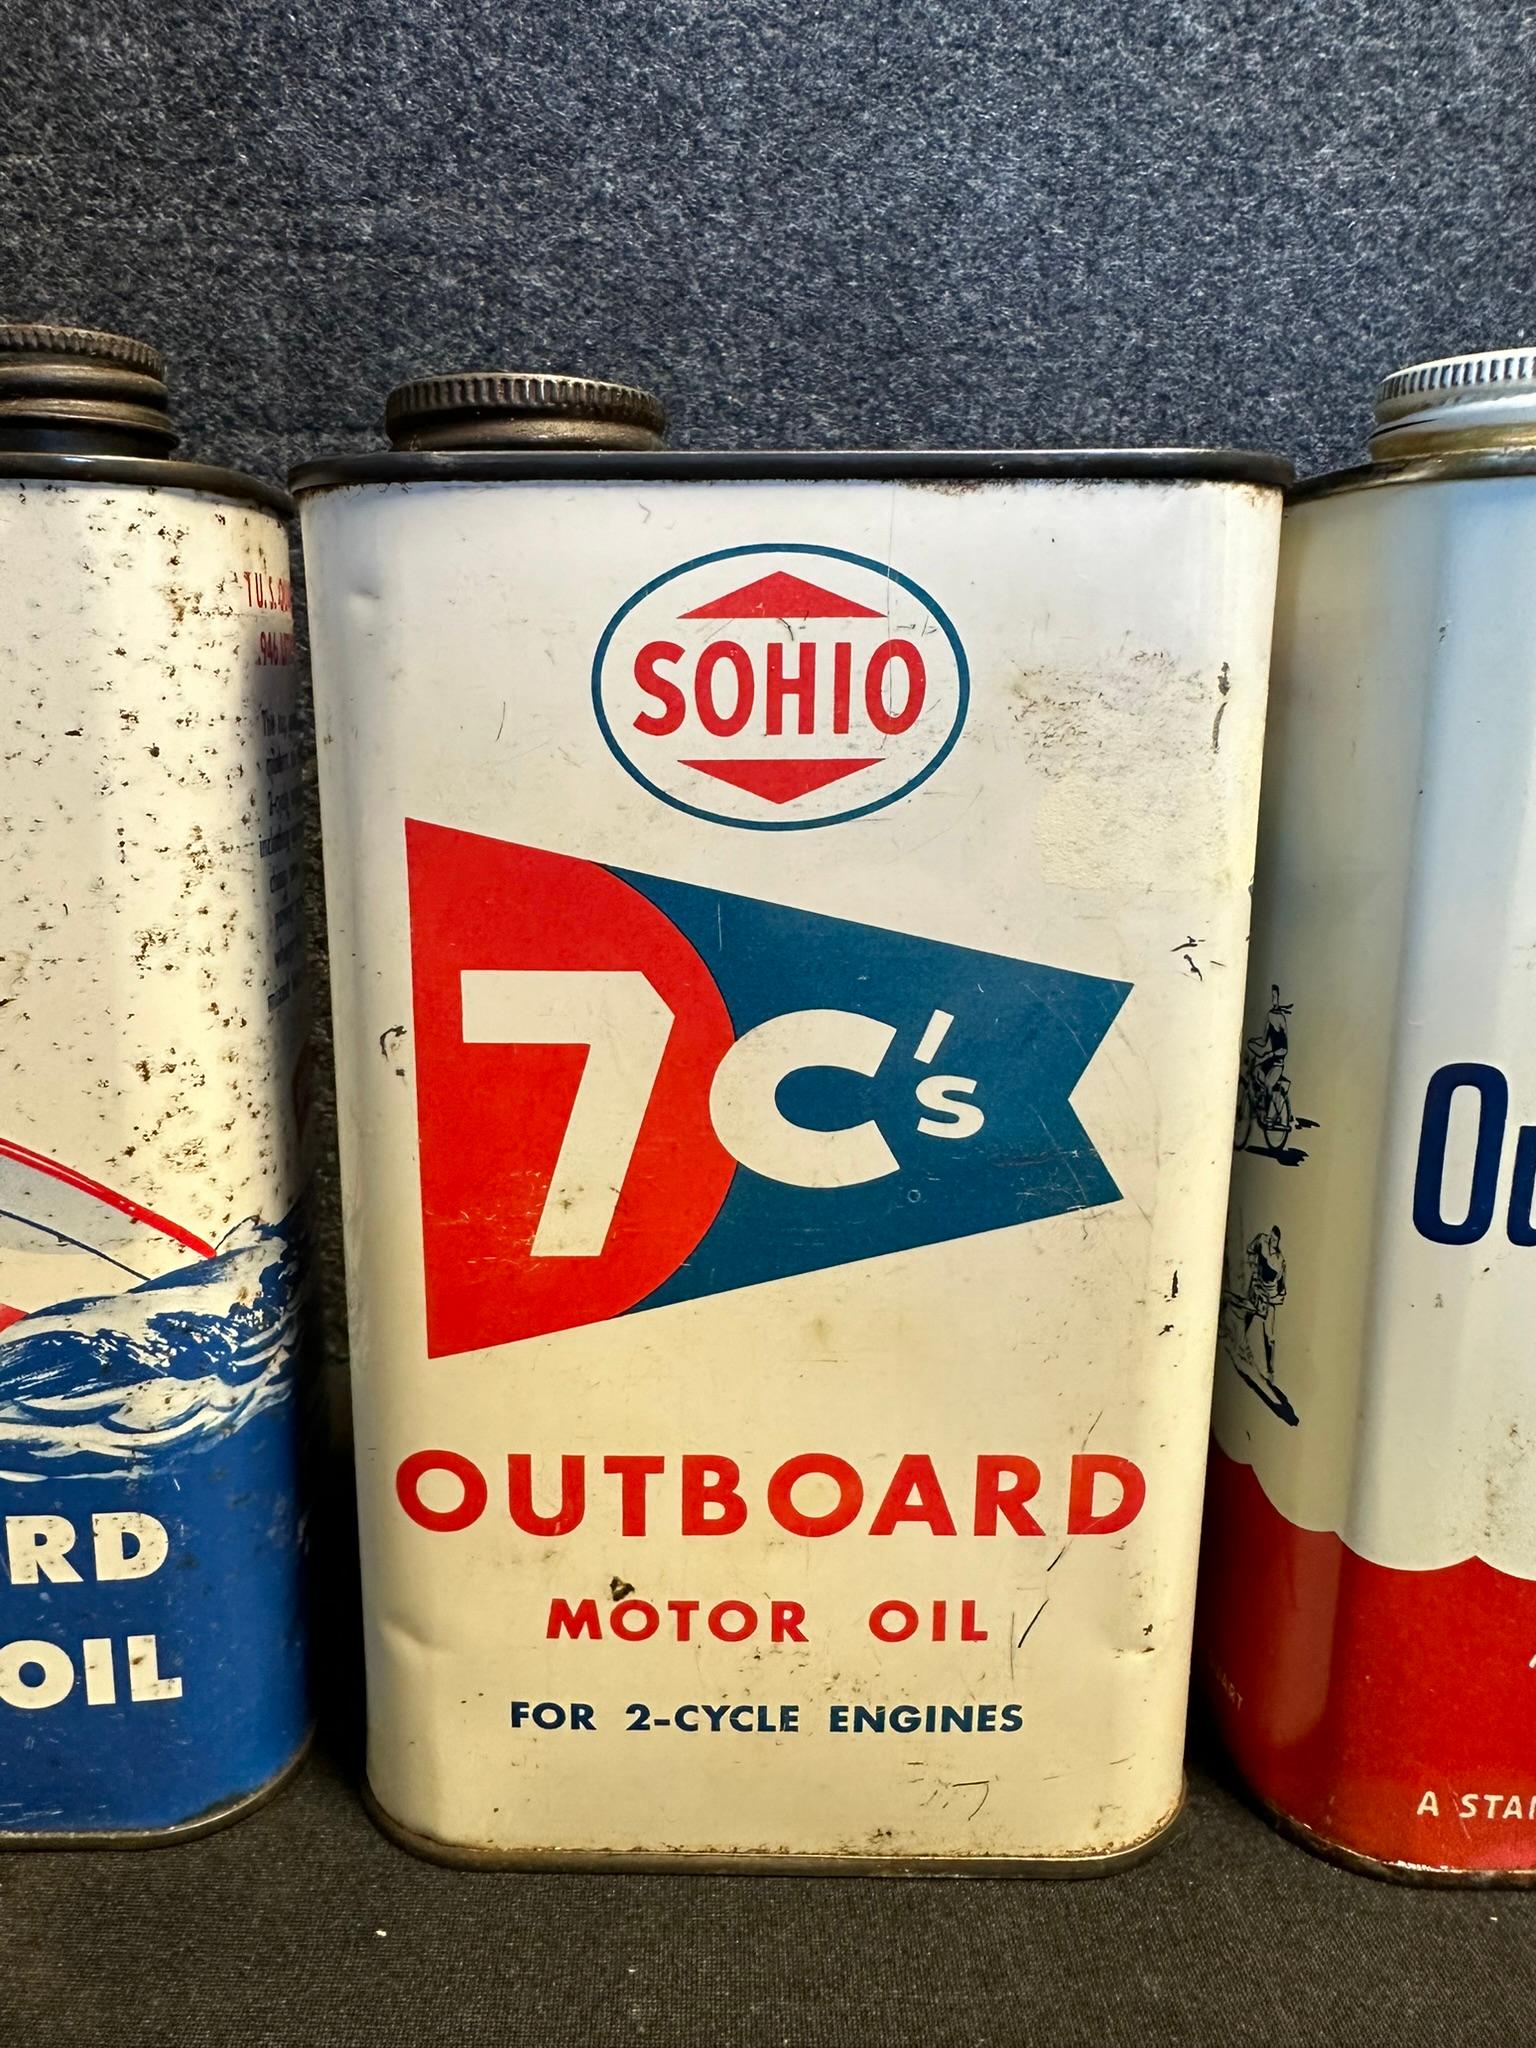 Lot 4 Outboard 1 Quart Motor Oil Cans: Esso, Atlantic, Sohio 7c's & Standard Oil